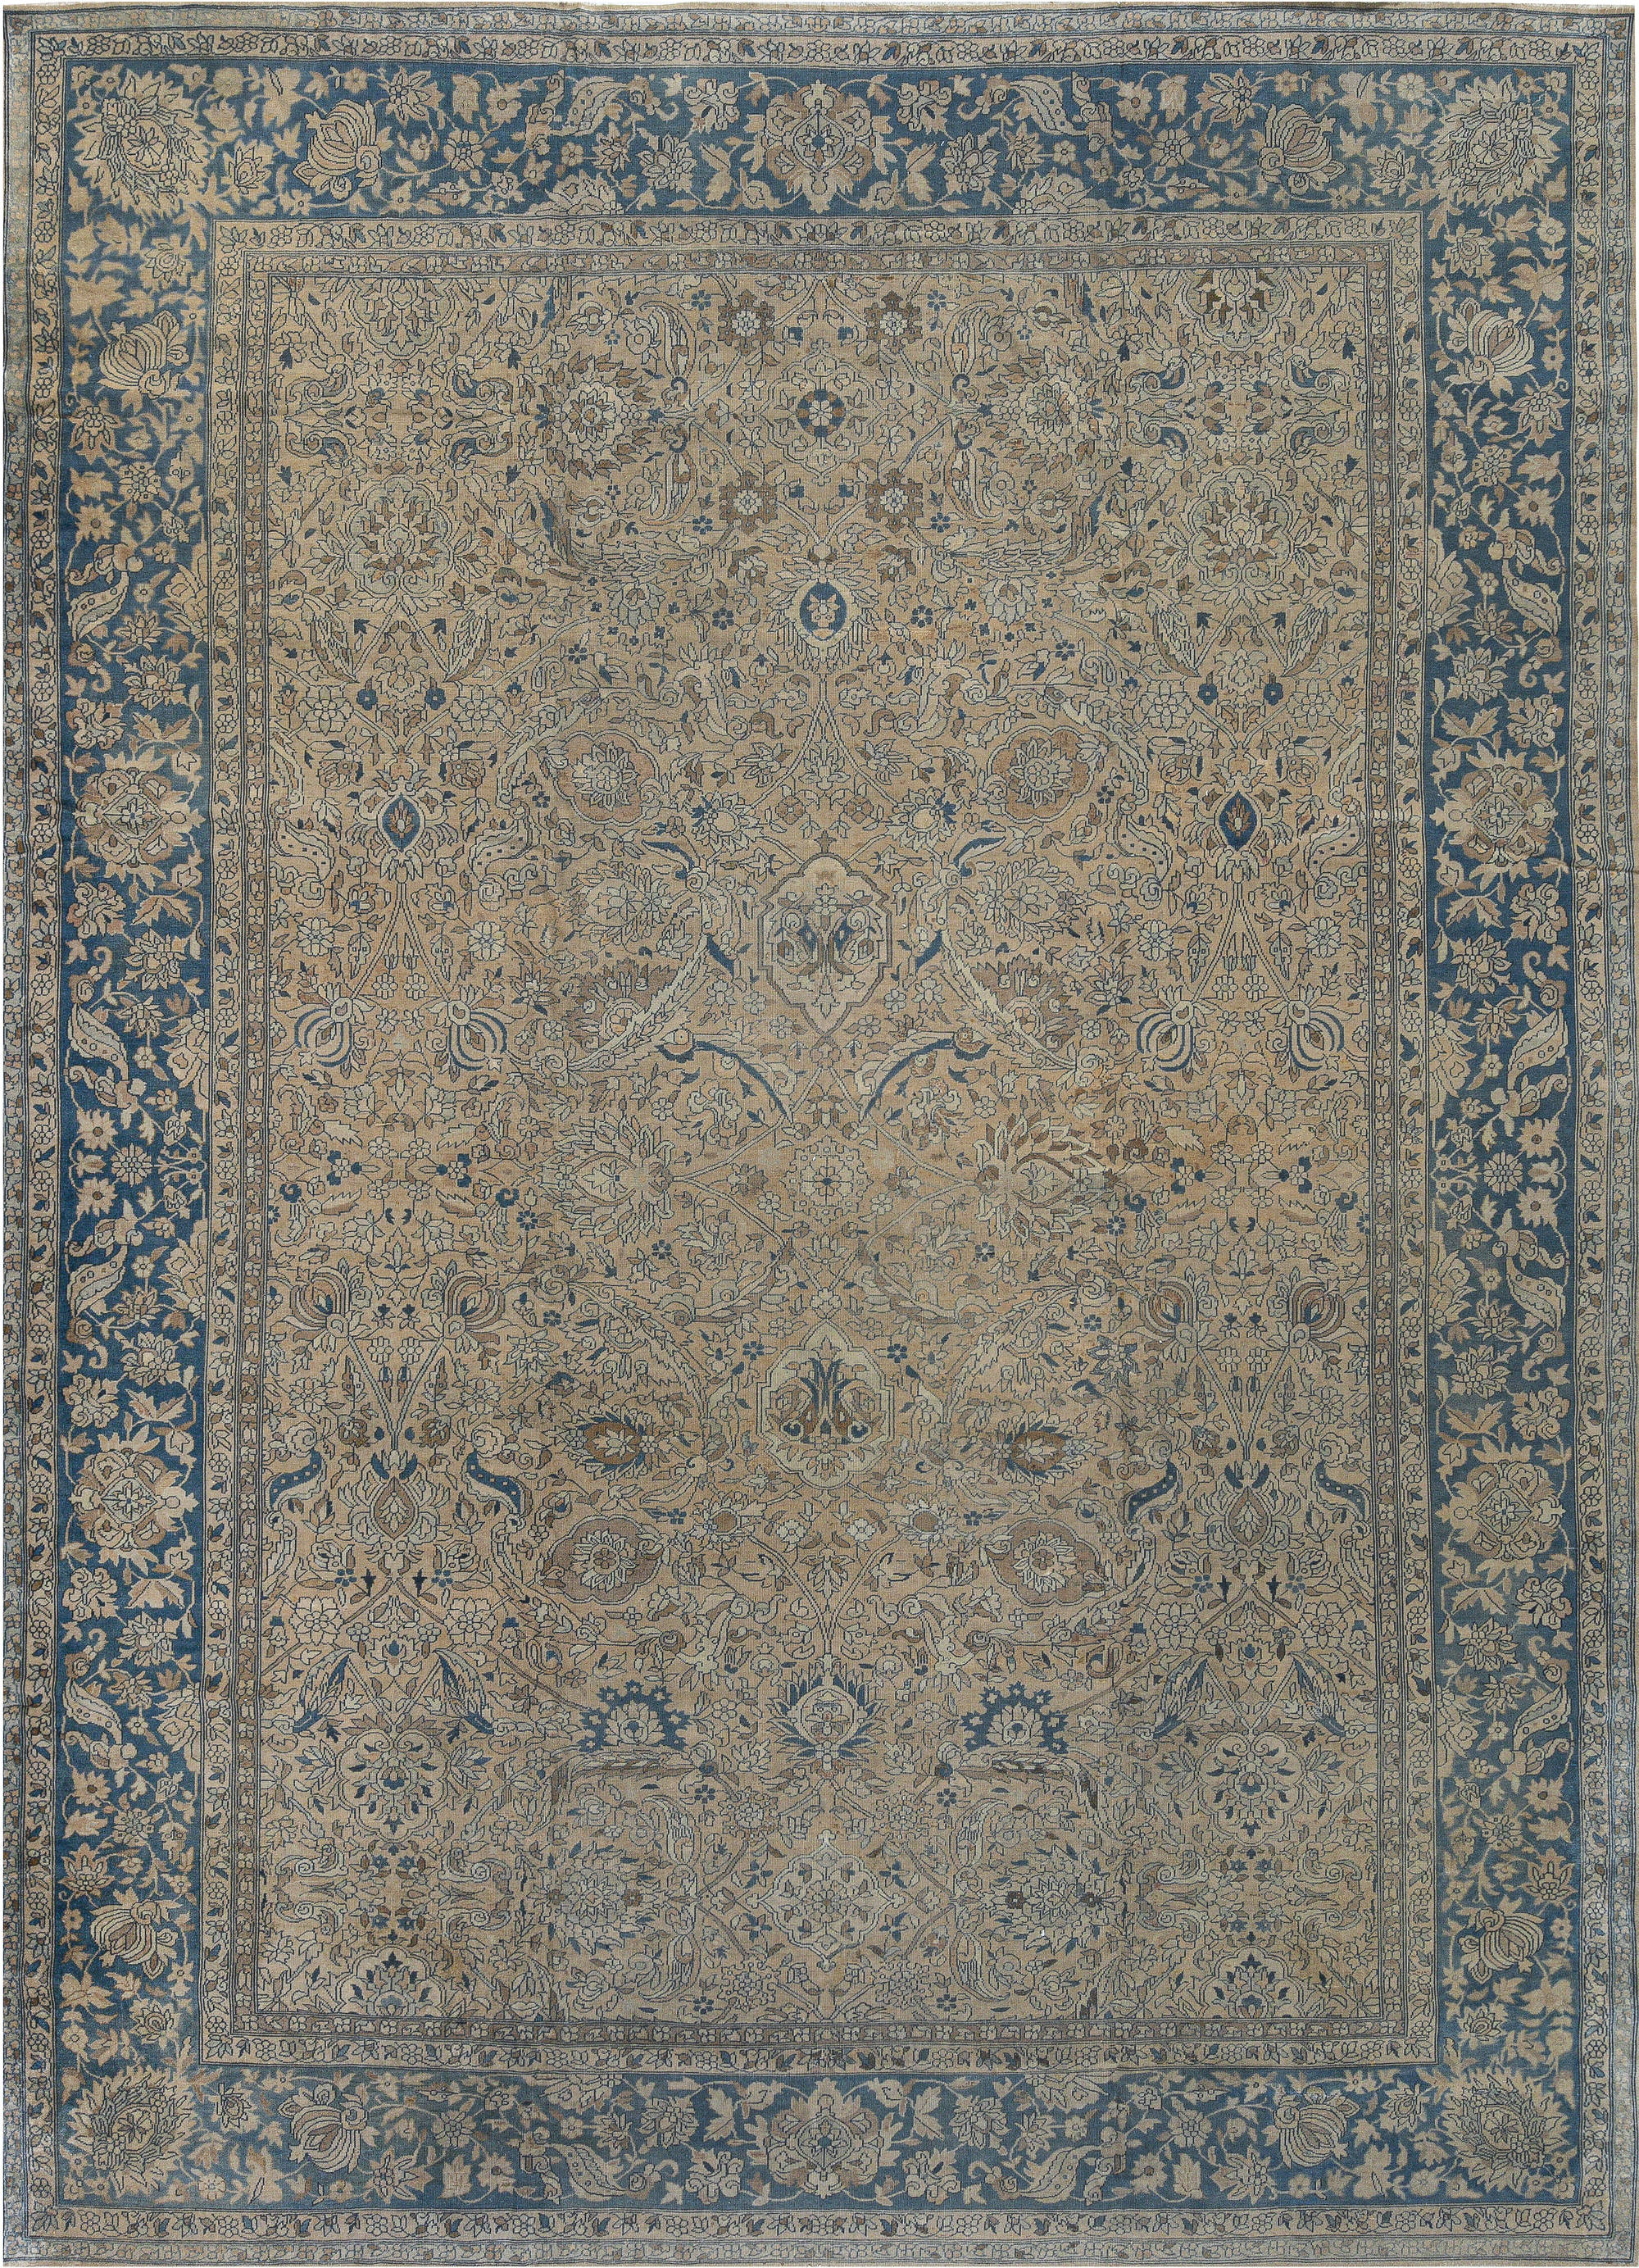 Authentic 19th Century <mark class='searchwp-highlight'>Persian</mark> Tabriz Beige, Brown, Blue Handmade Wool Carpet BB7336